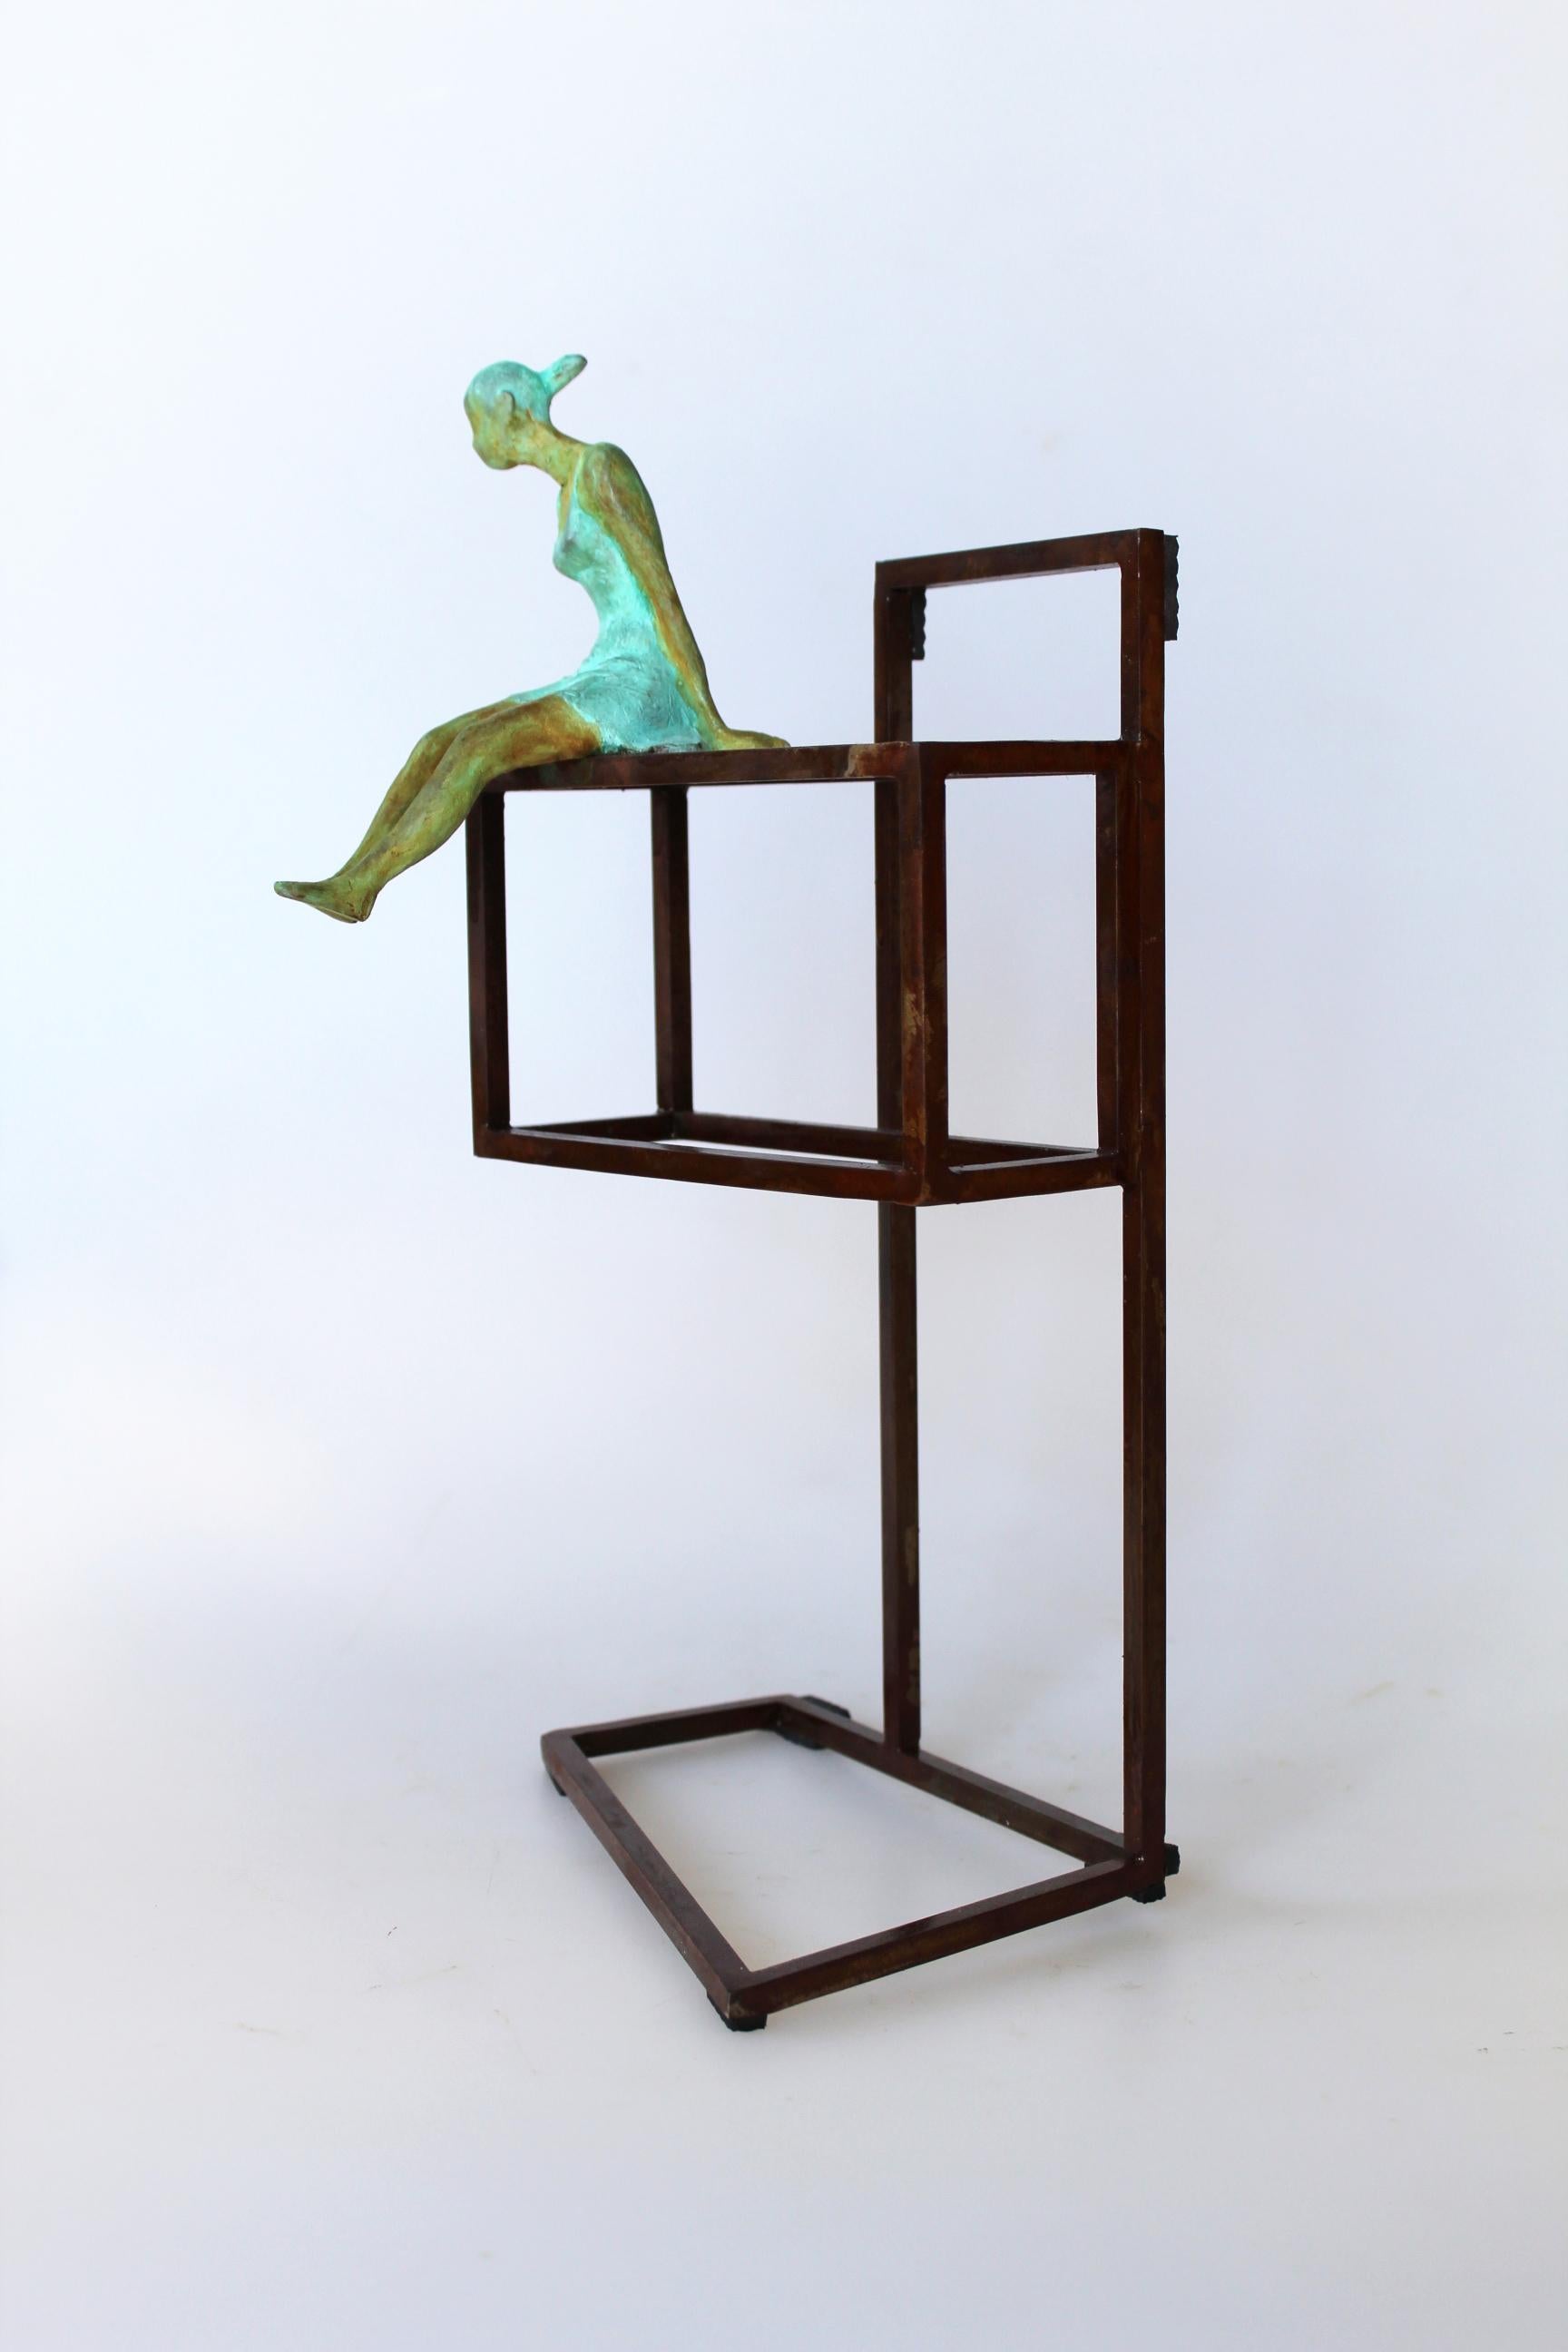 Joan Artigas Planas Figurative Sculpture - "Discovery" contemporary bronze table, mural sculpture figurative girl freedom